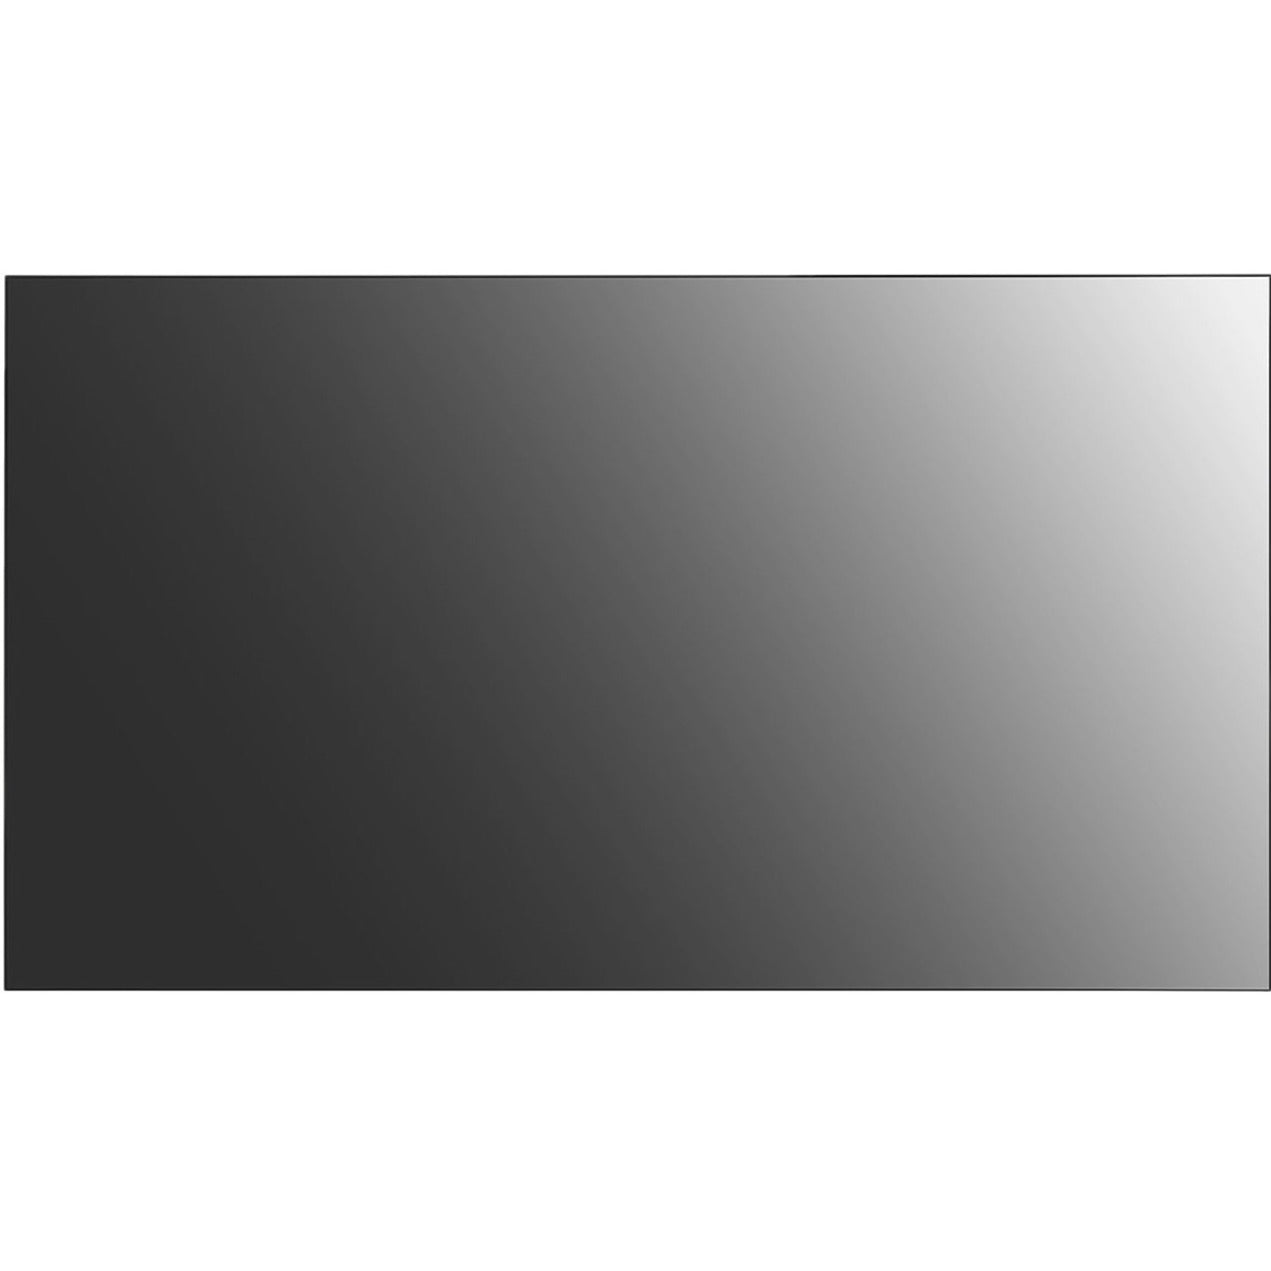 LG 49VL5G-M 49" 500 nits FHD Slim Bezel Video Wall, Energy Star, ErP Certified